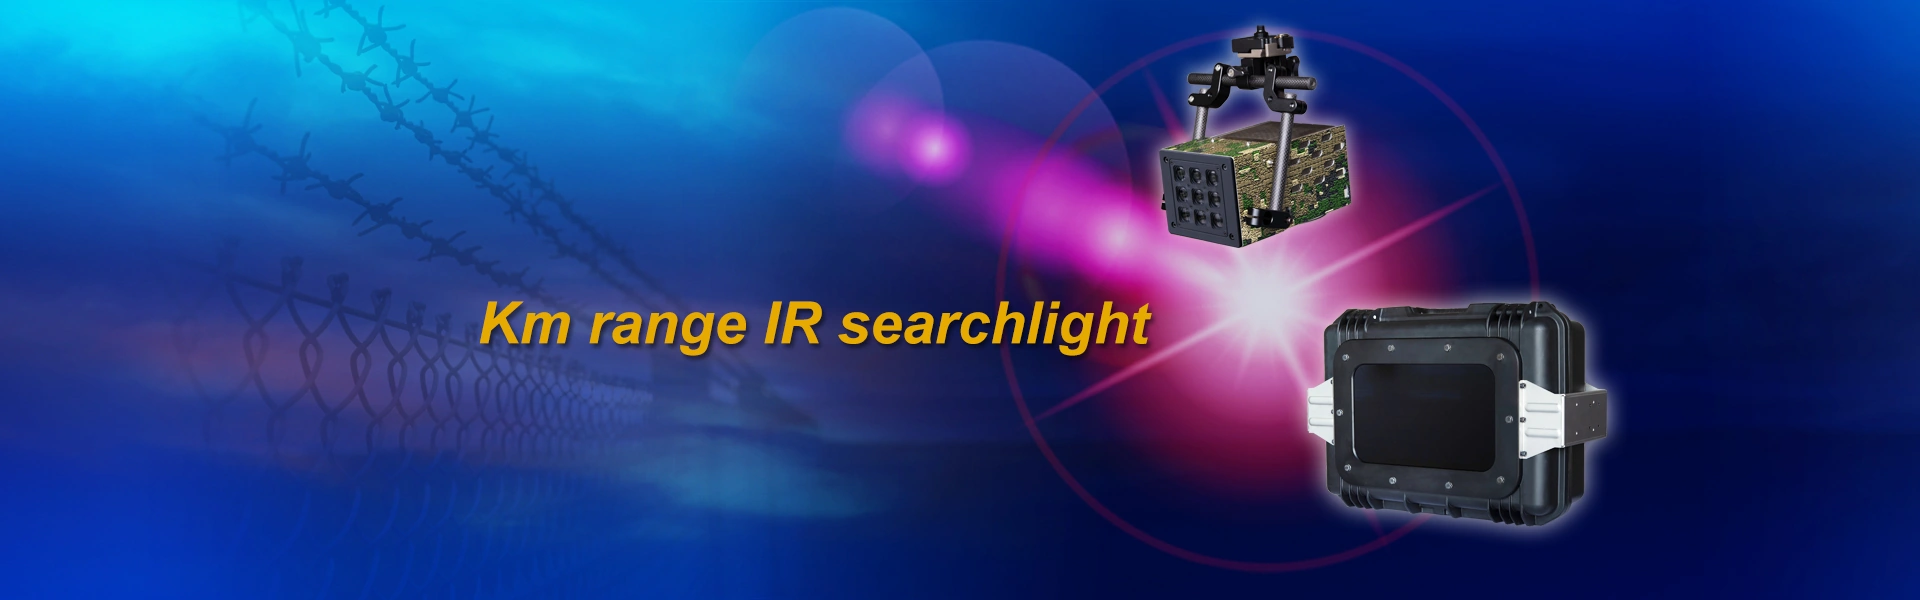 Km-range IR searchlight